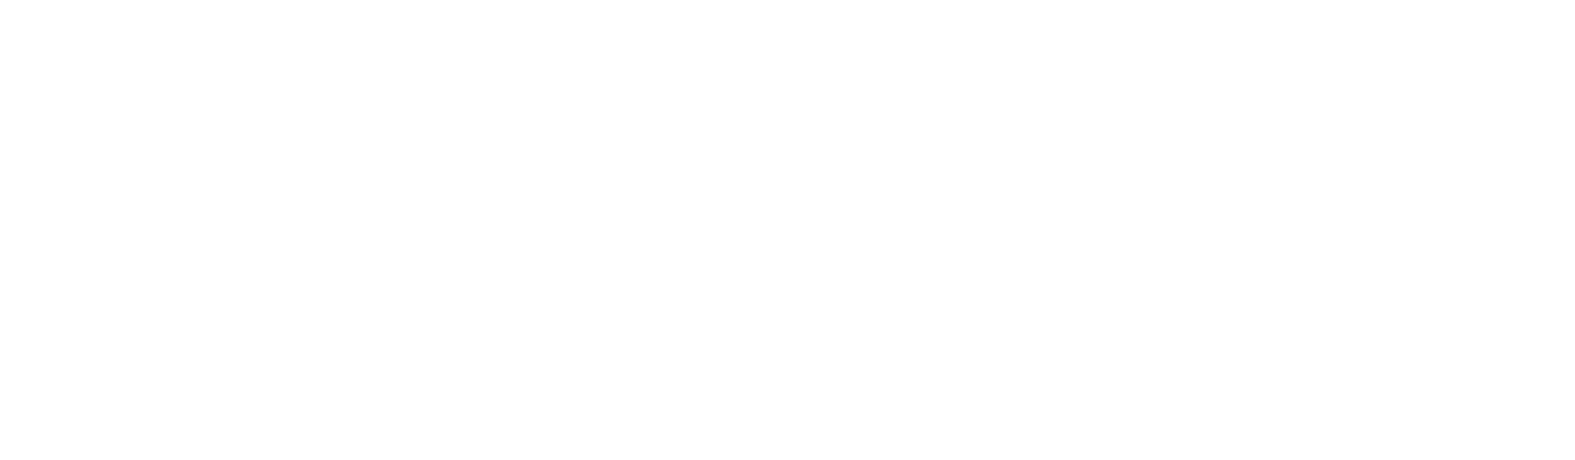 IONOS Group logo for dark backgrounds (transparent PNG)